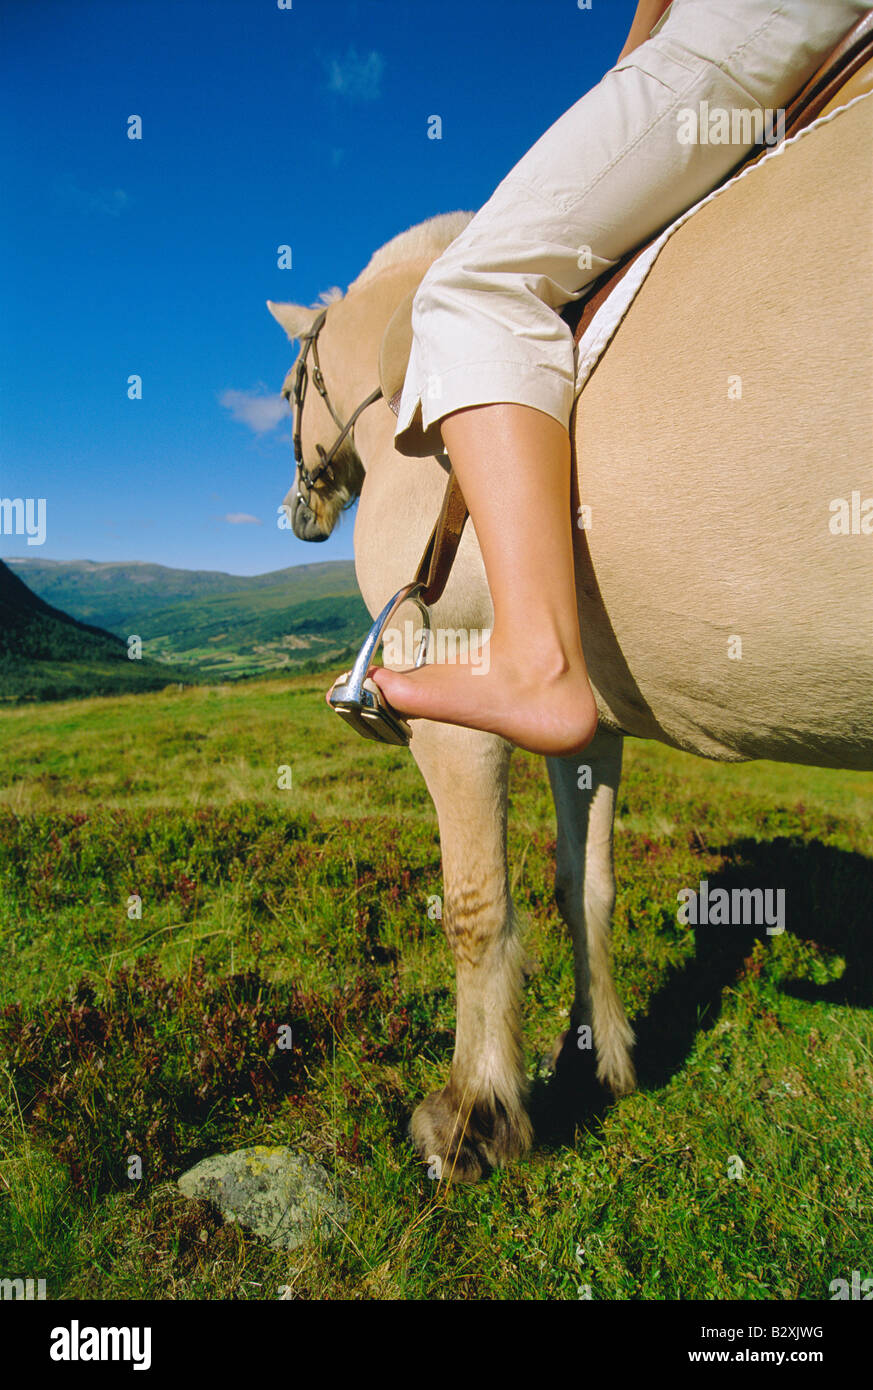 Woman outdoors riding horse dans emplacement pittoresque Banque D'Images